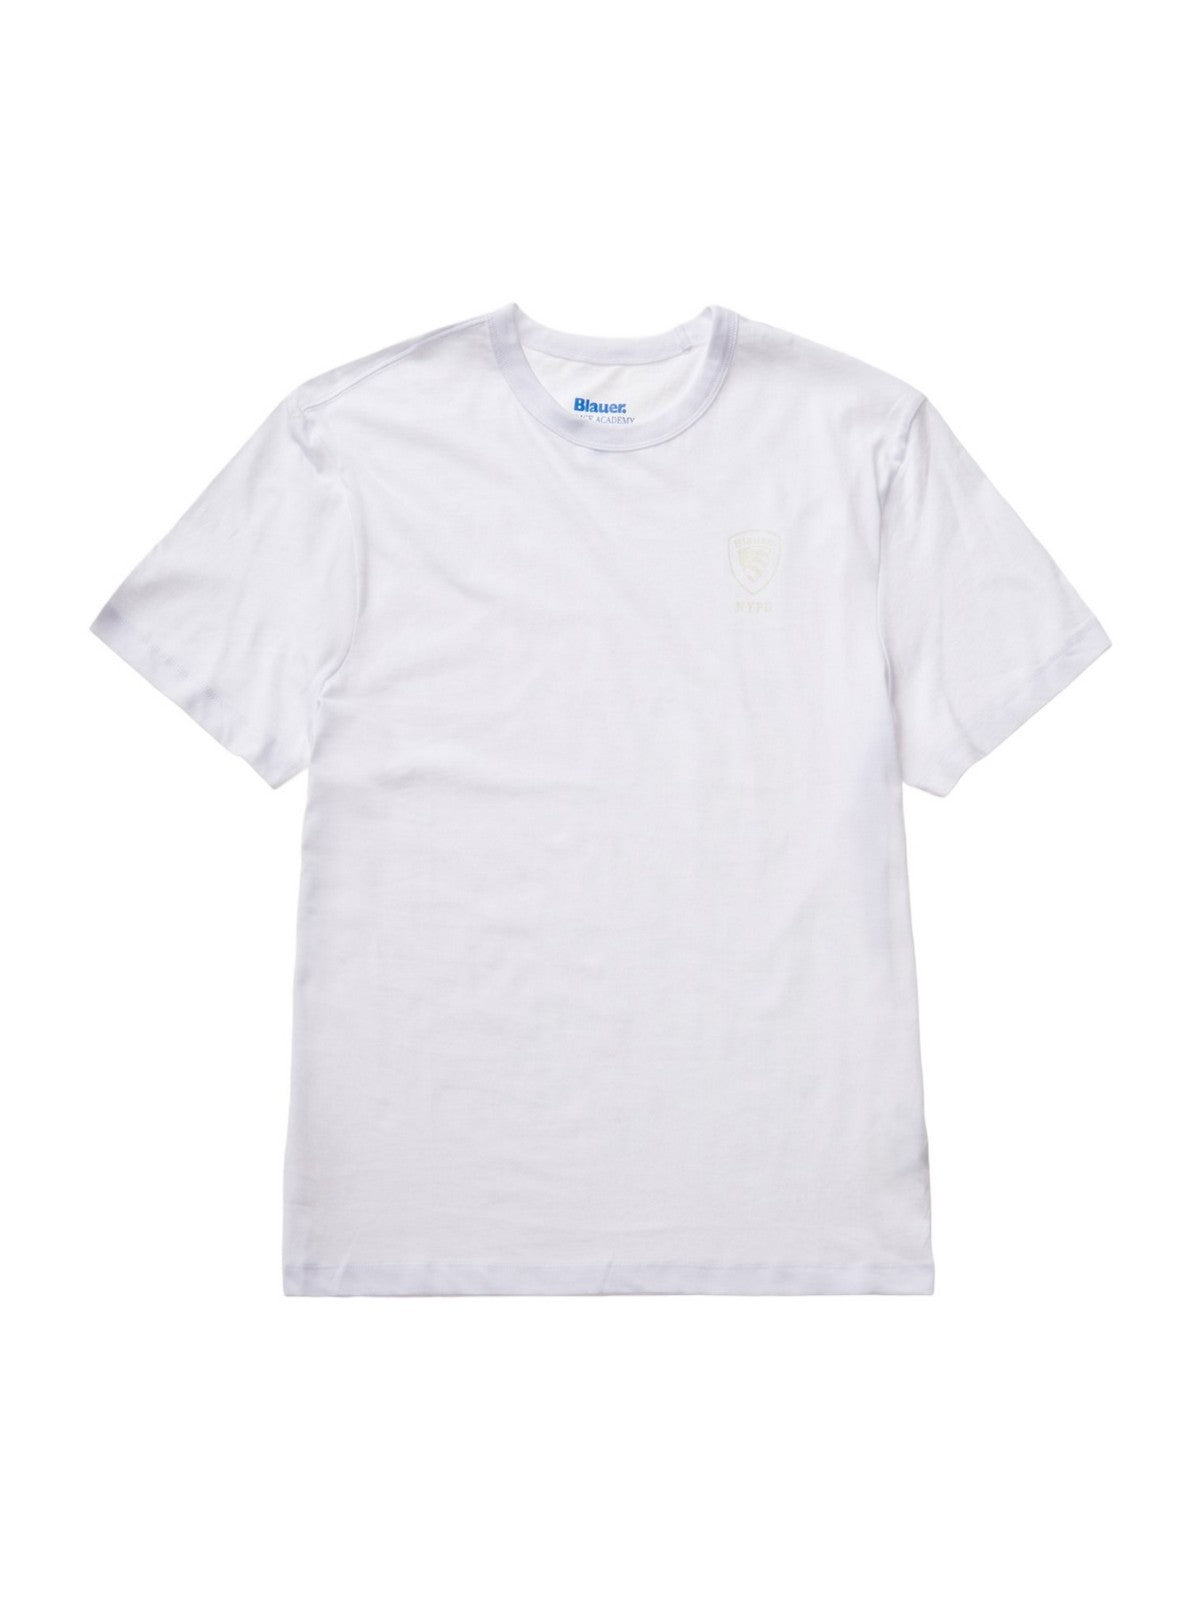 BLAUER T-Shirt e Polo Uomo  24SBLUH02143 004547 100 Bianco